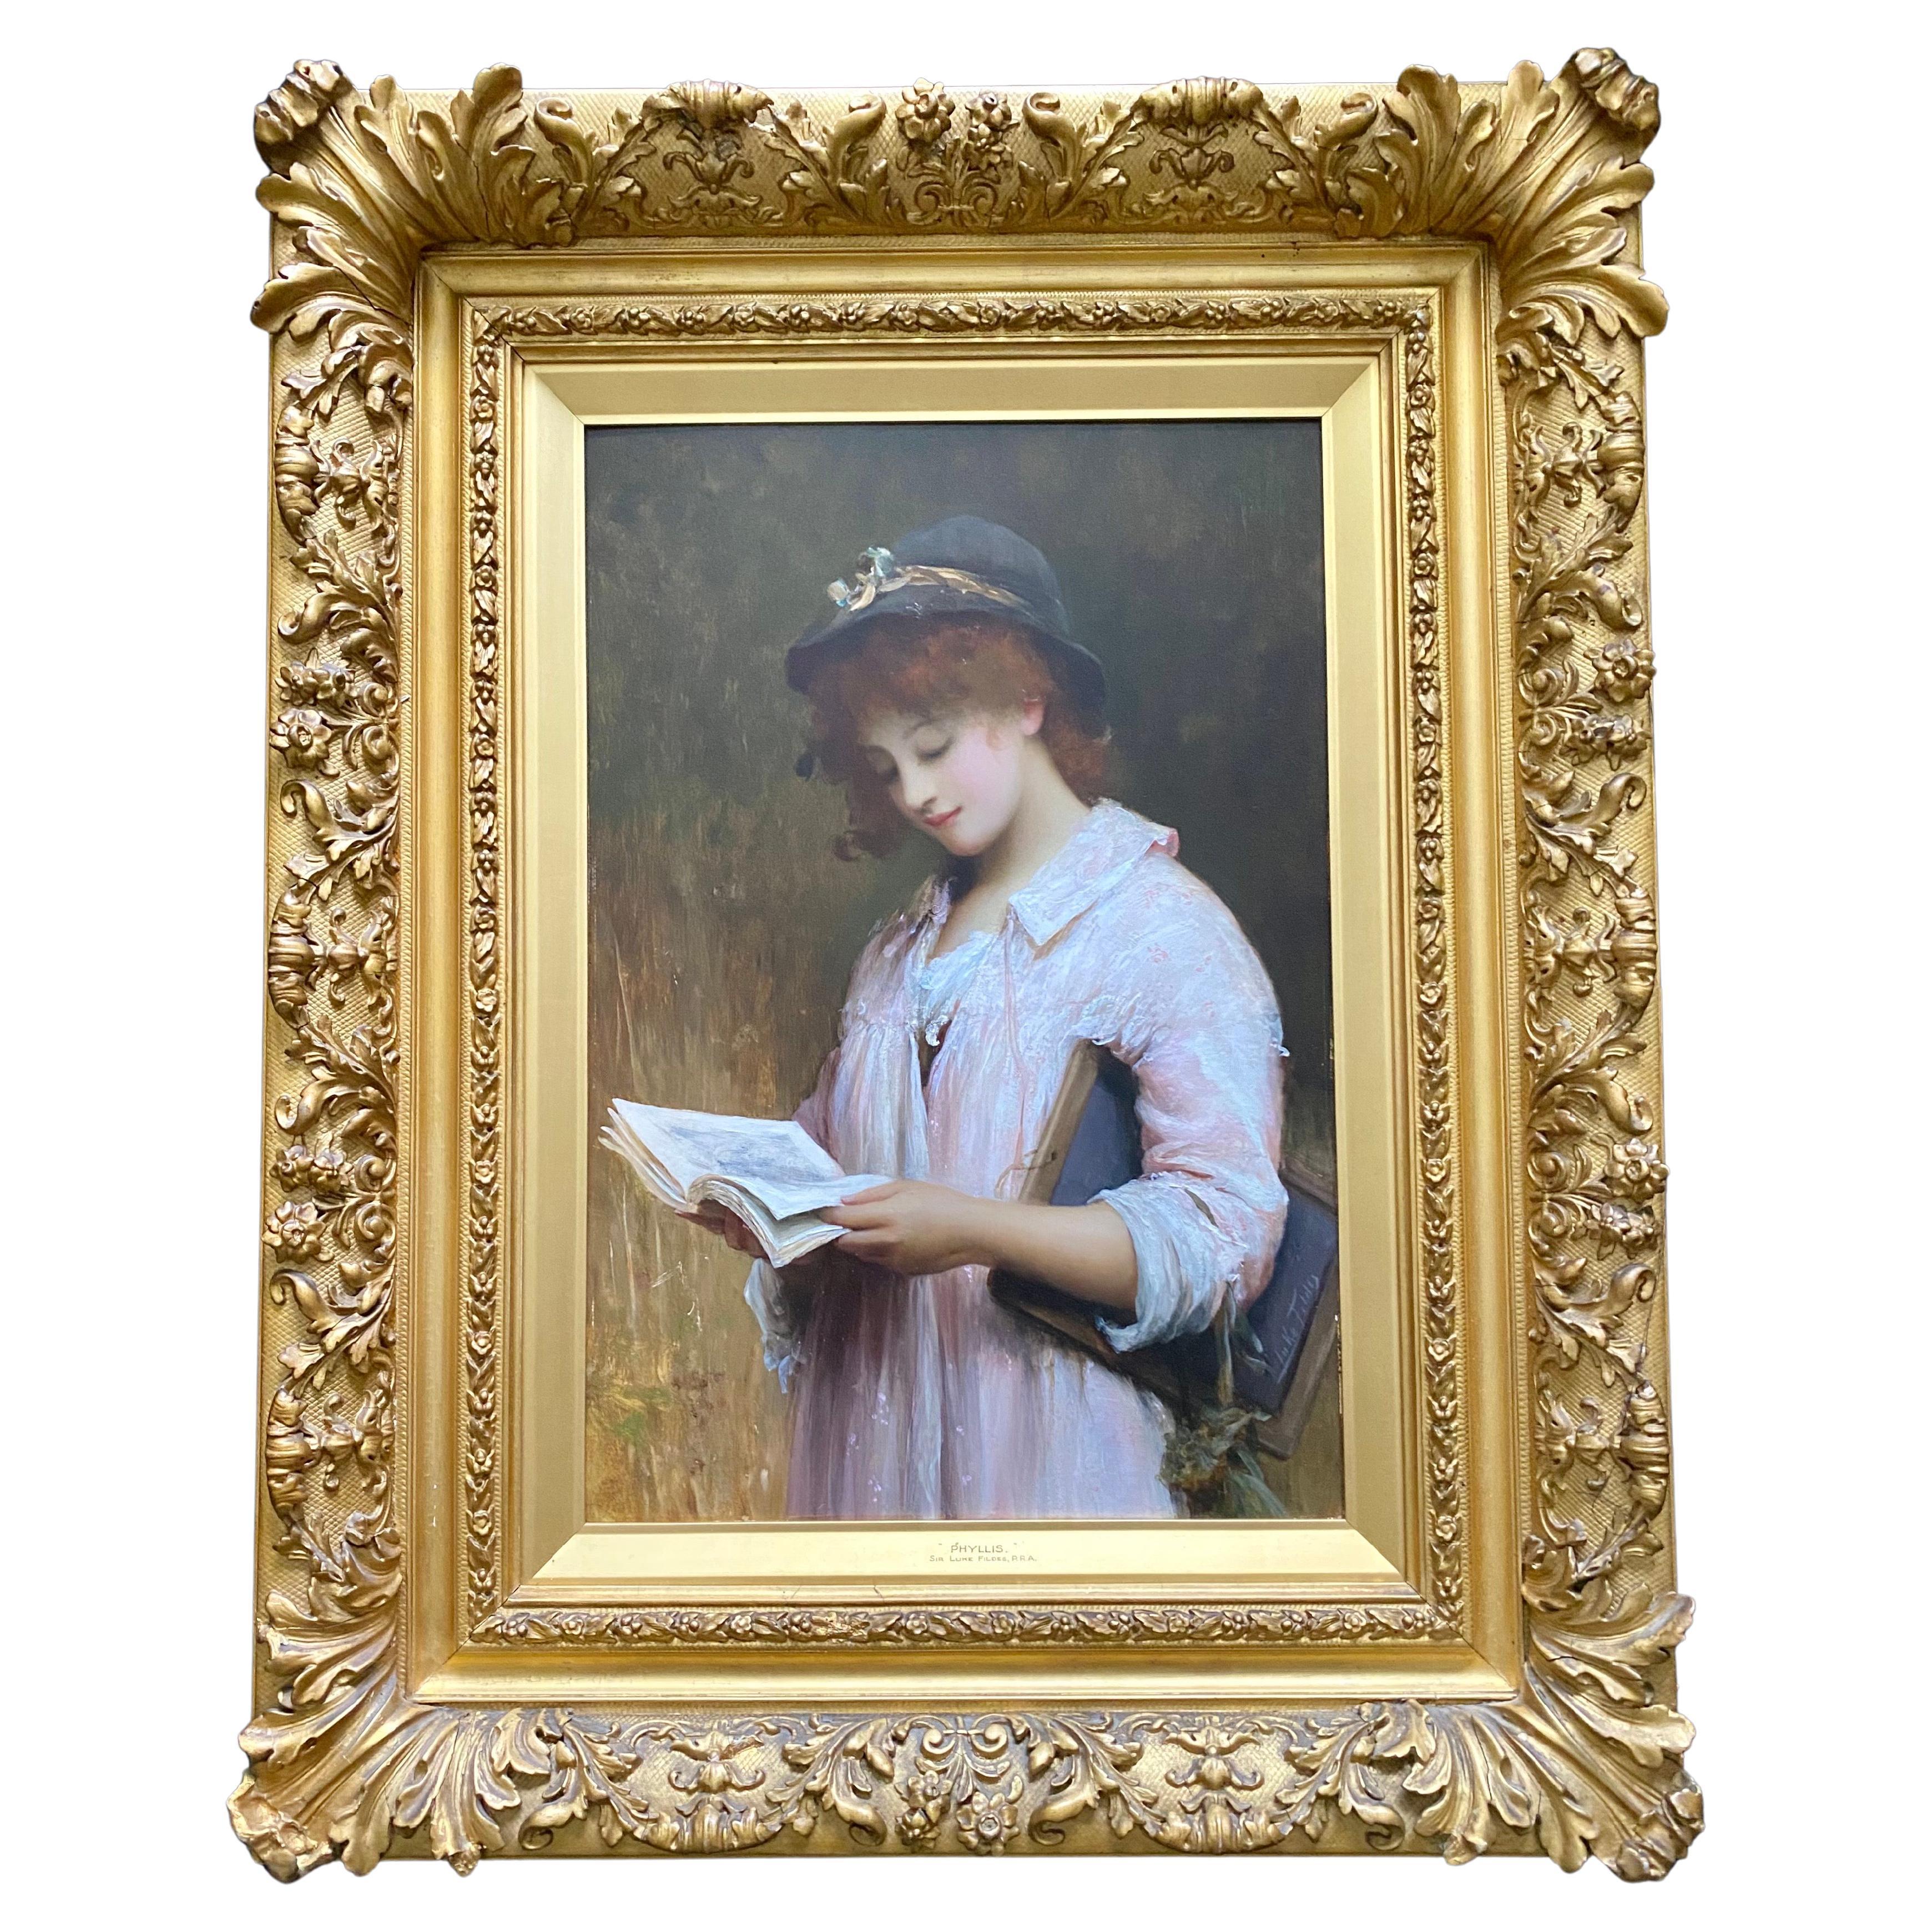 Sir Samuel Luke Fildes RA, A Superb Quality Portrait Titled "Phyllis" For Sale